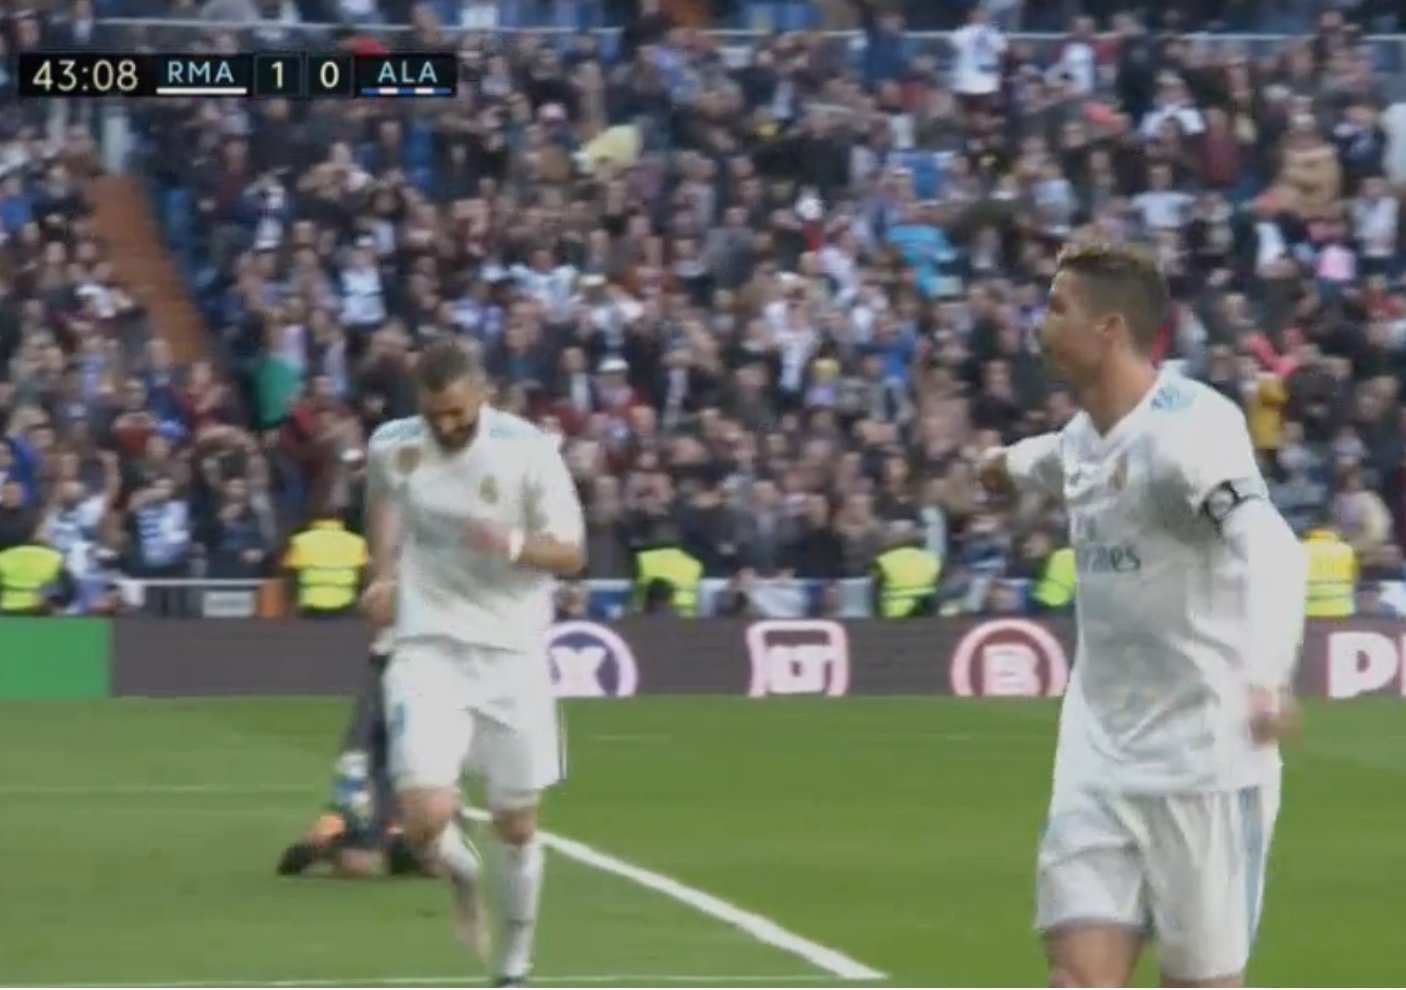 Cristiano Ronaldo caught on camera instructing Benzema where to